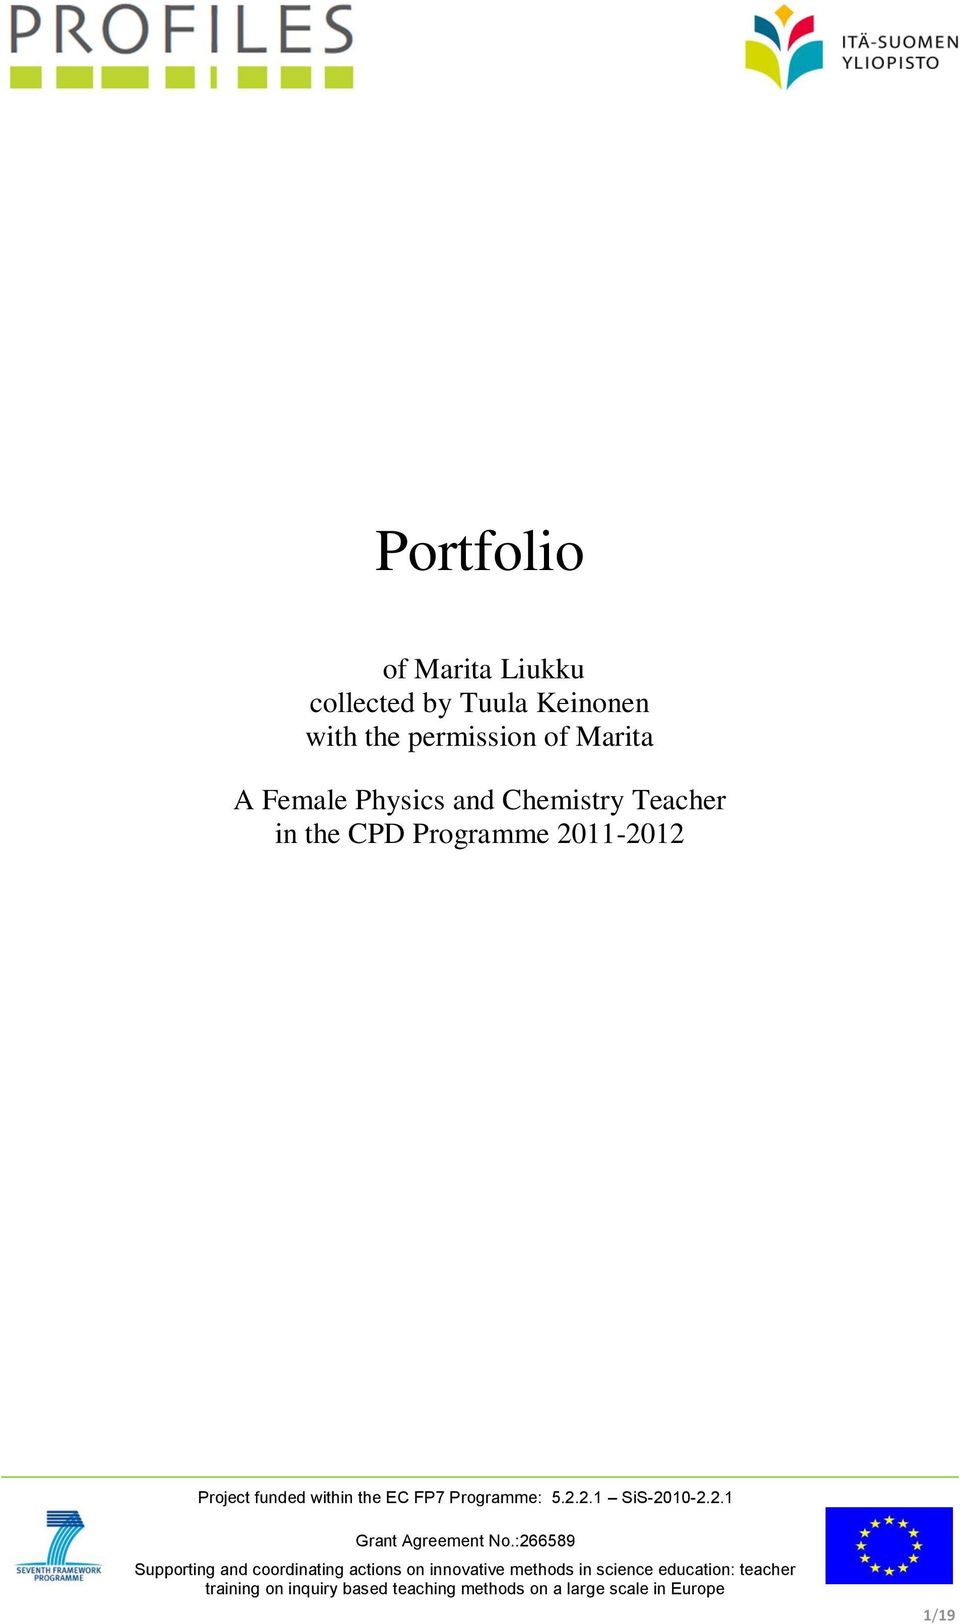 Marita A Female Physics and Chemistry